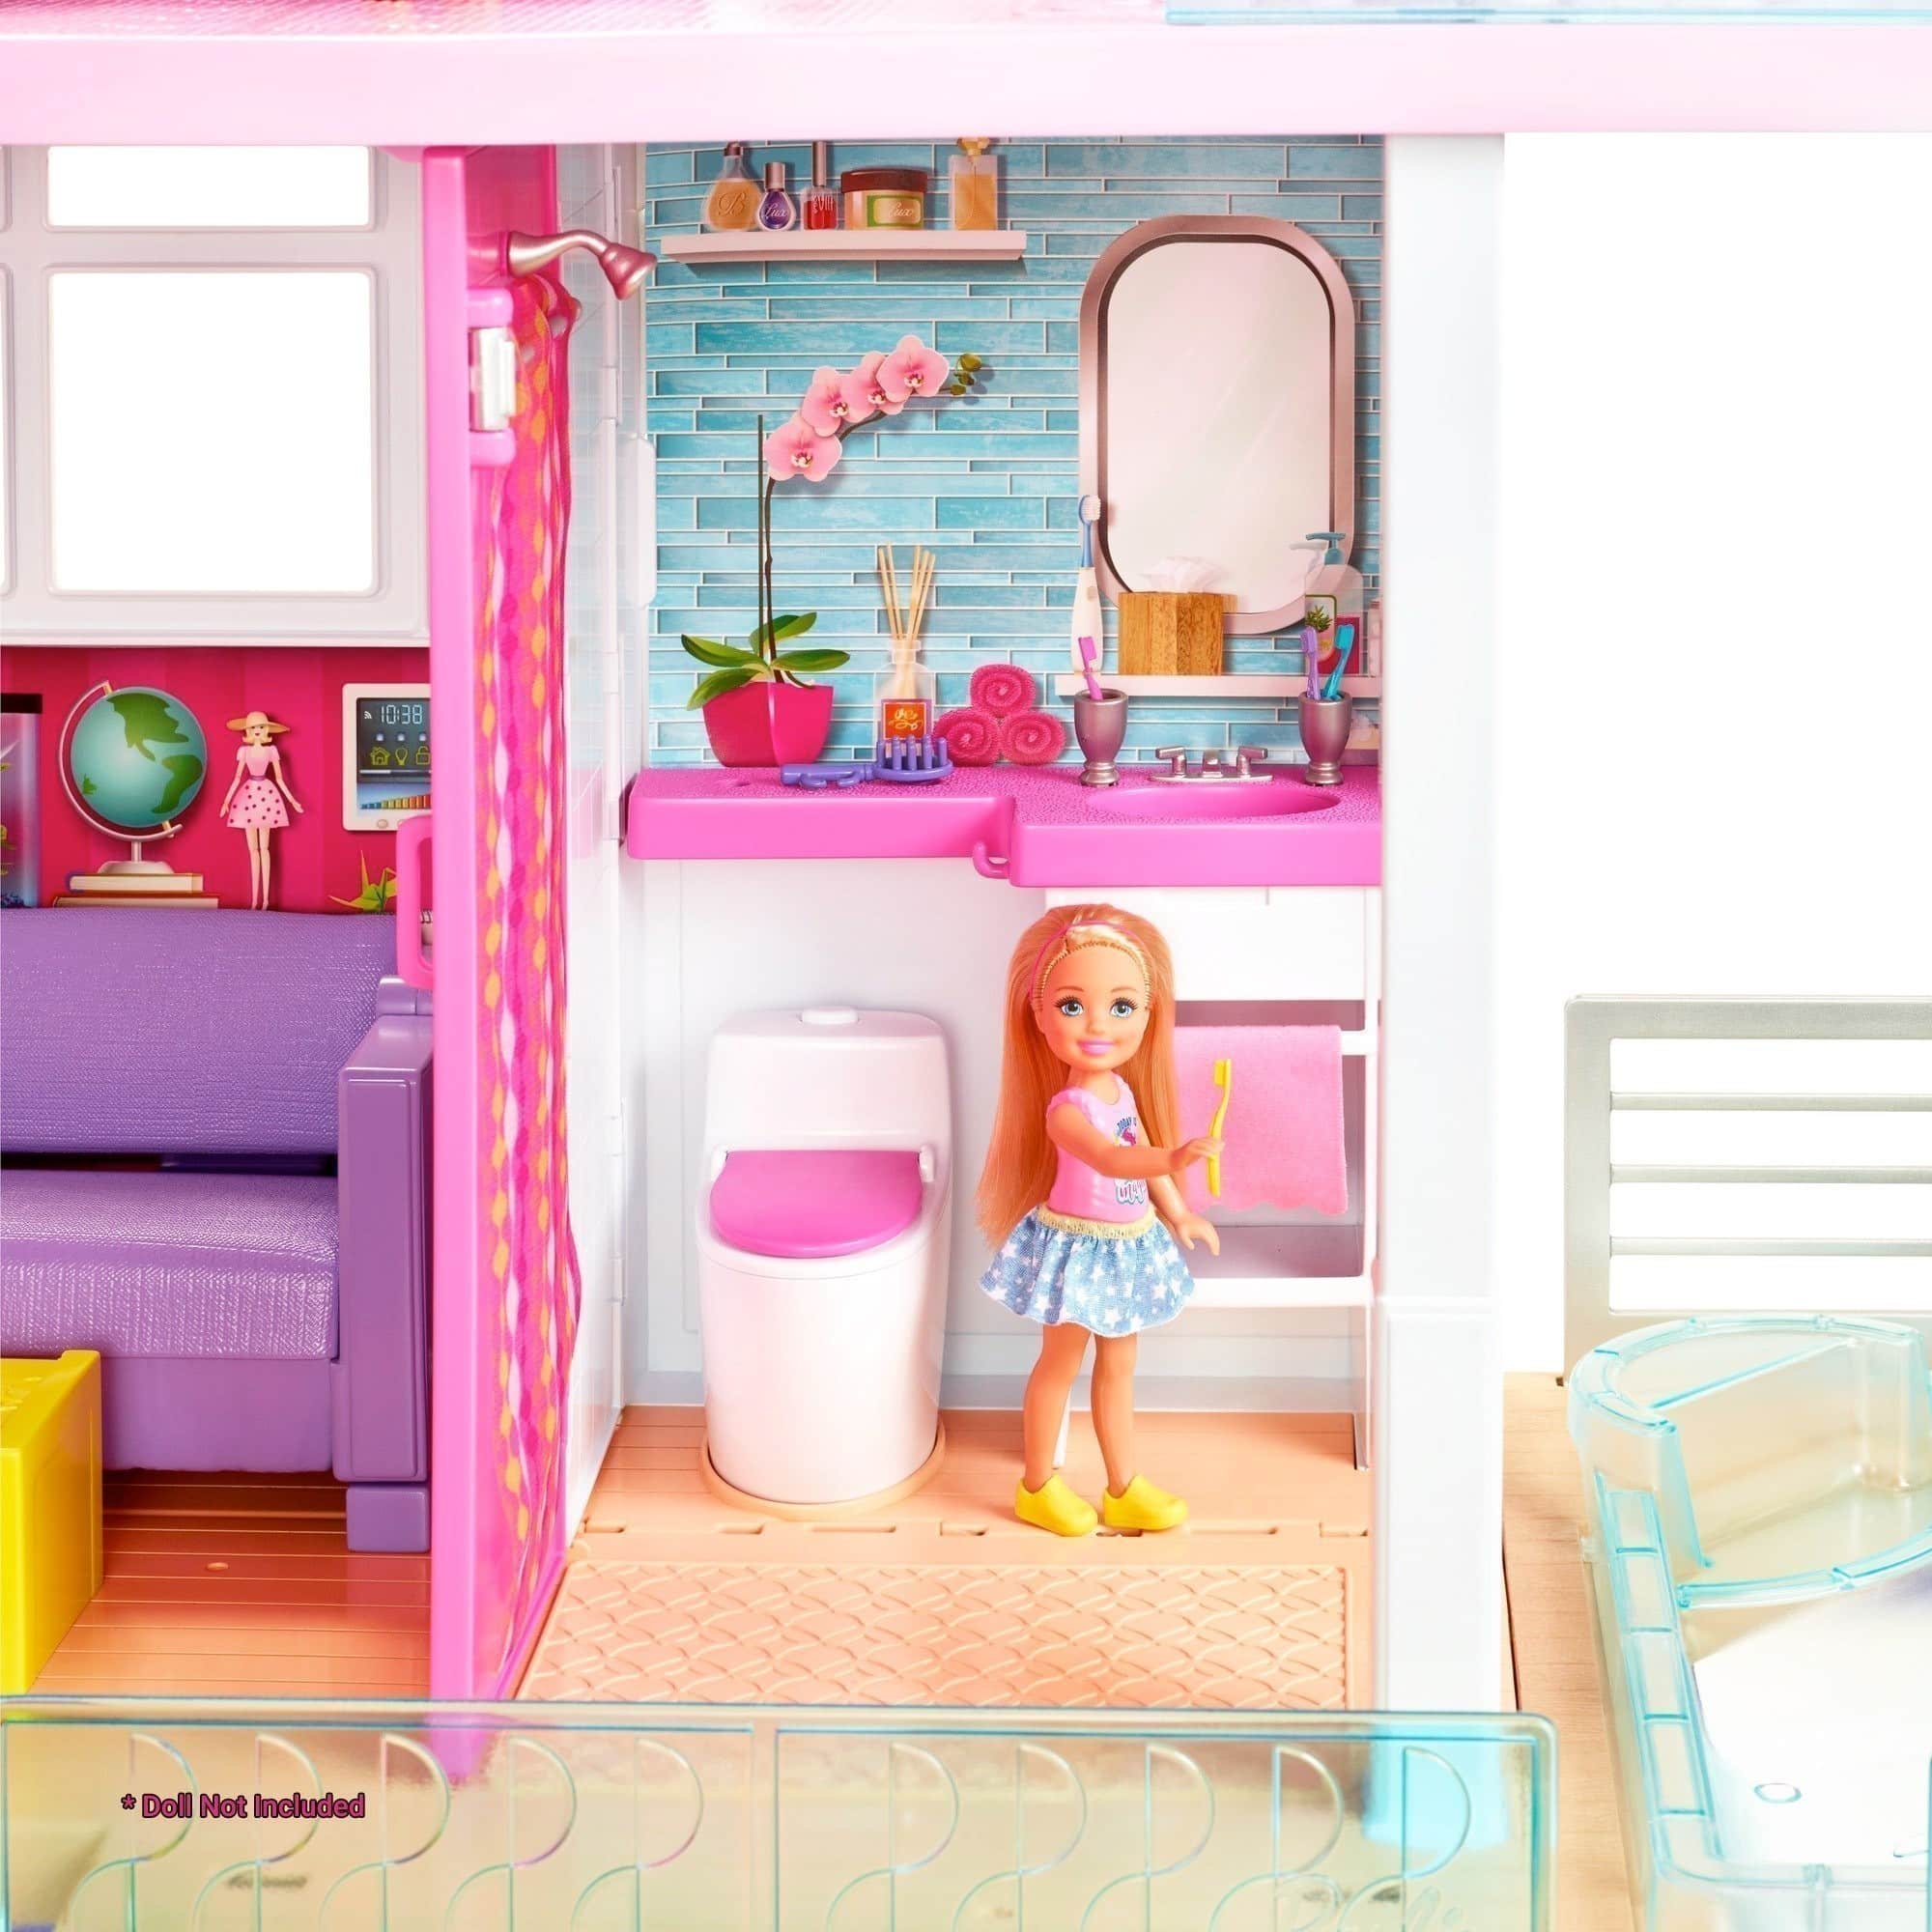 Barbie® - DreamHouse